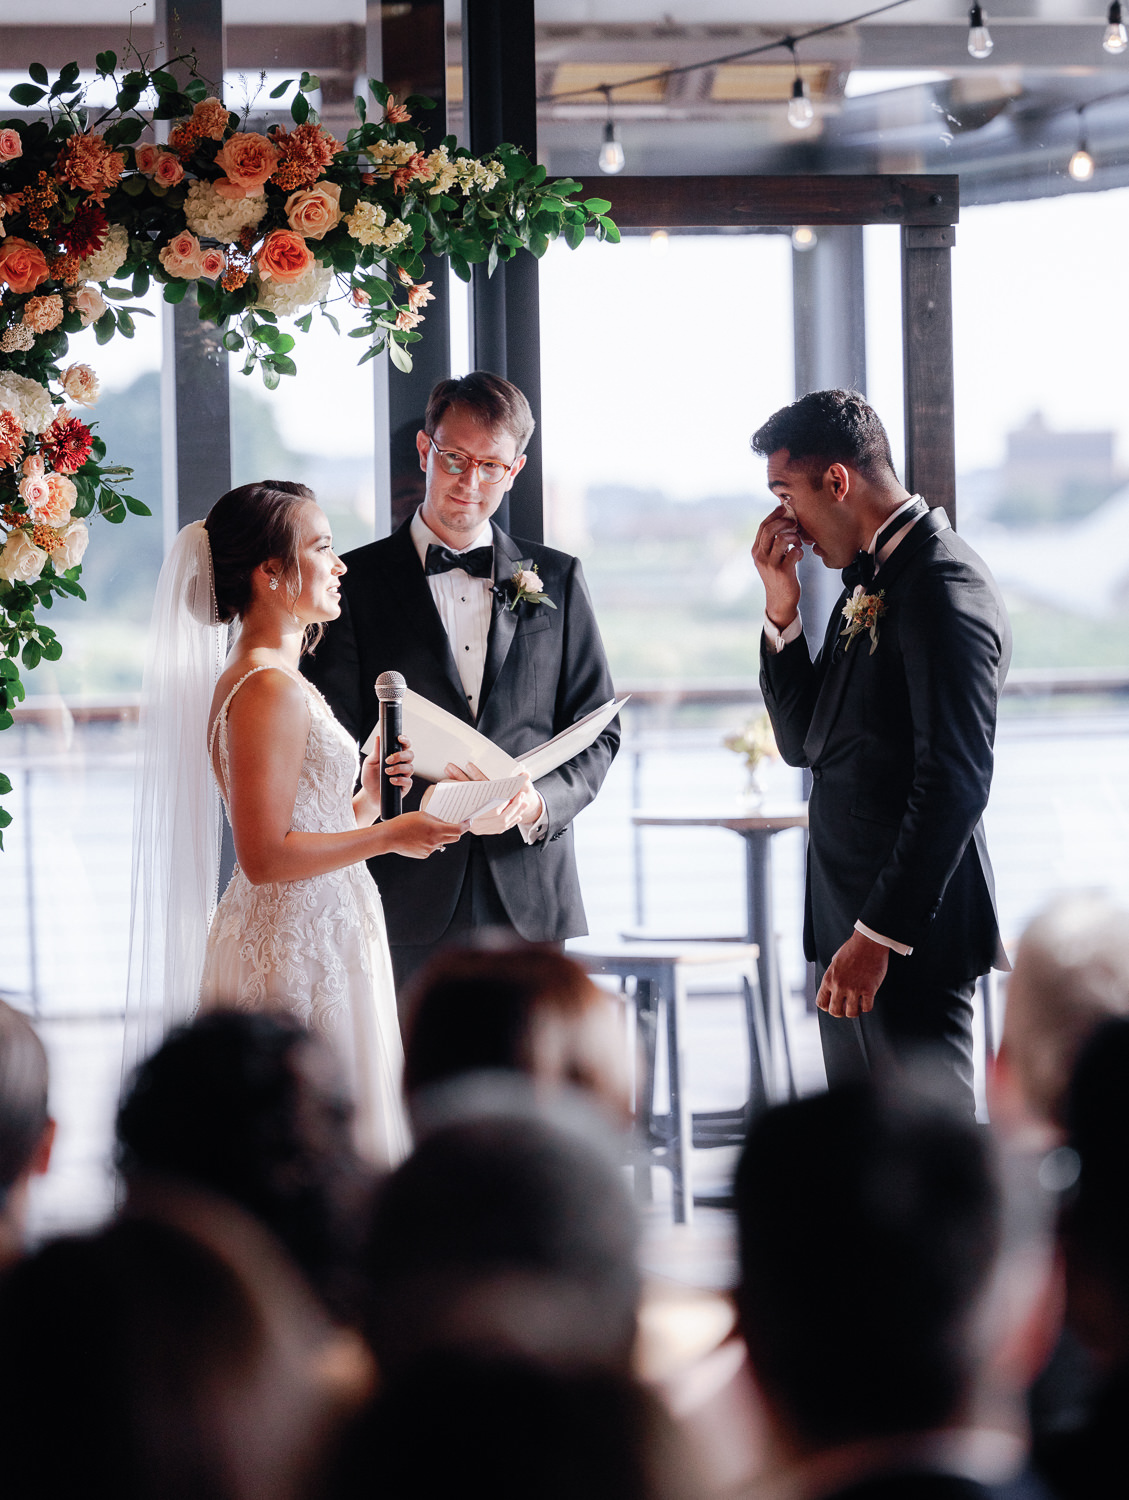 District winery wedding in Washington dc